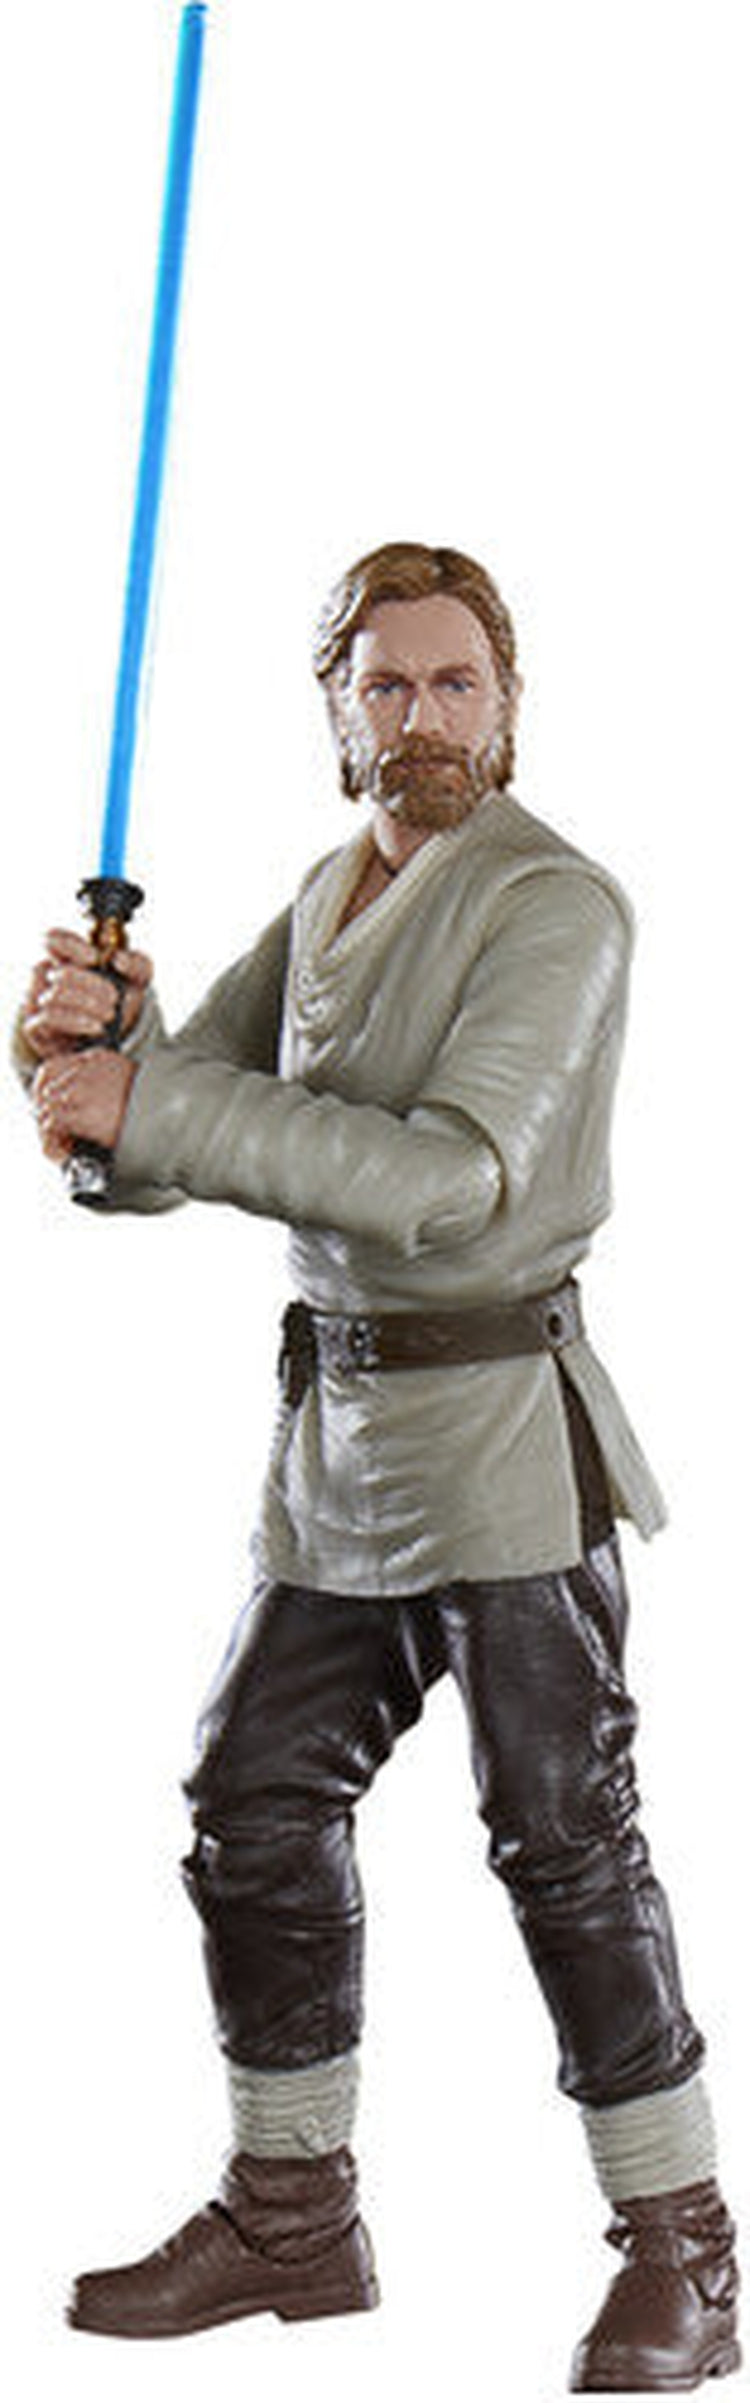 Hasbro Collectibles - Star Wars The Black Series Obi-Wan Kenobi (Wandering Jedi)